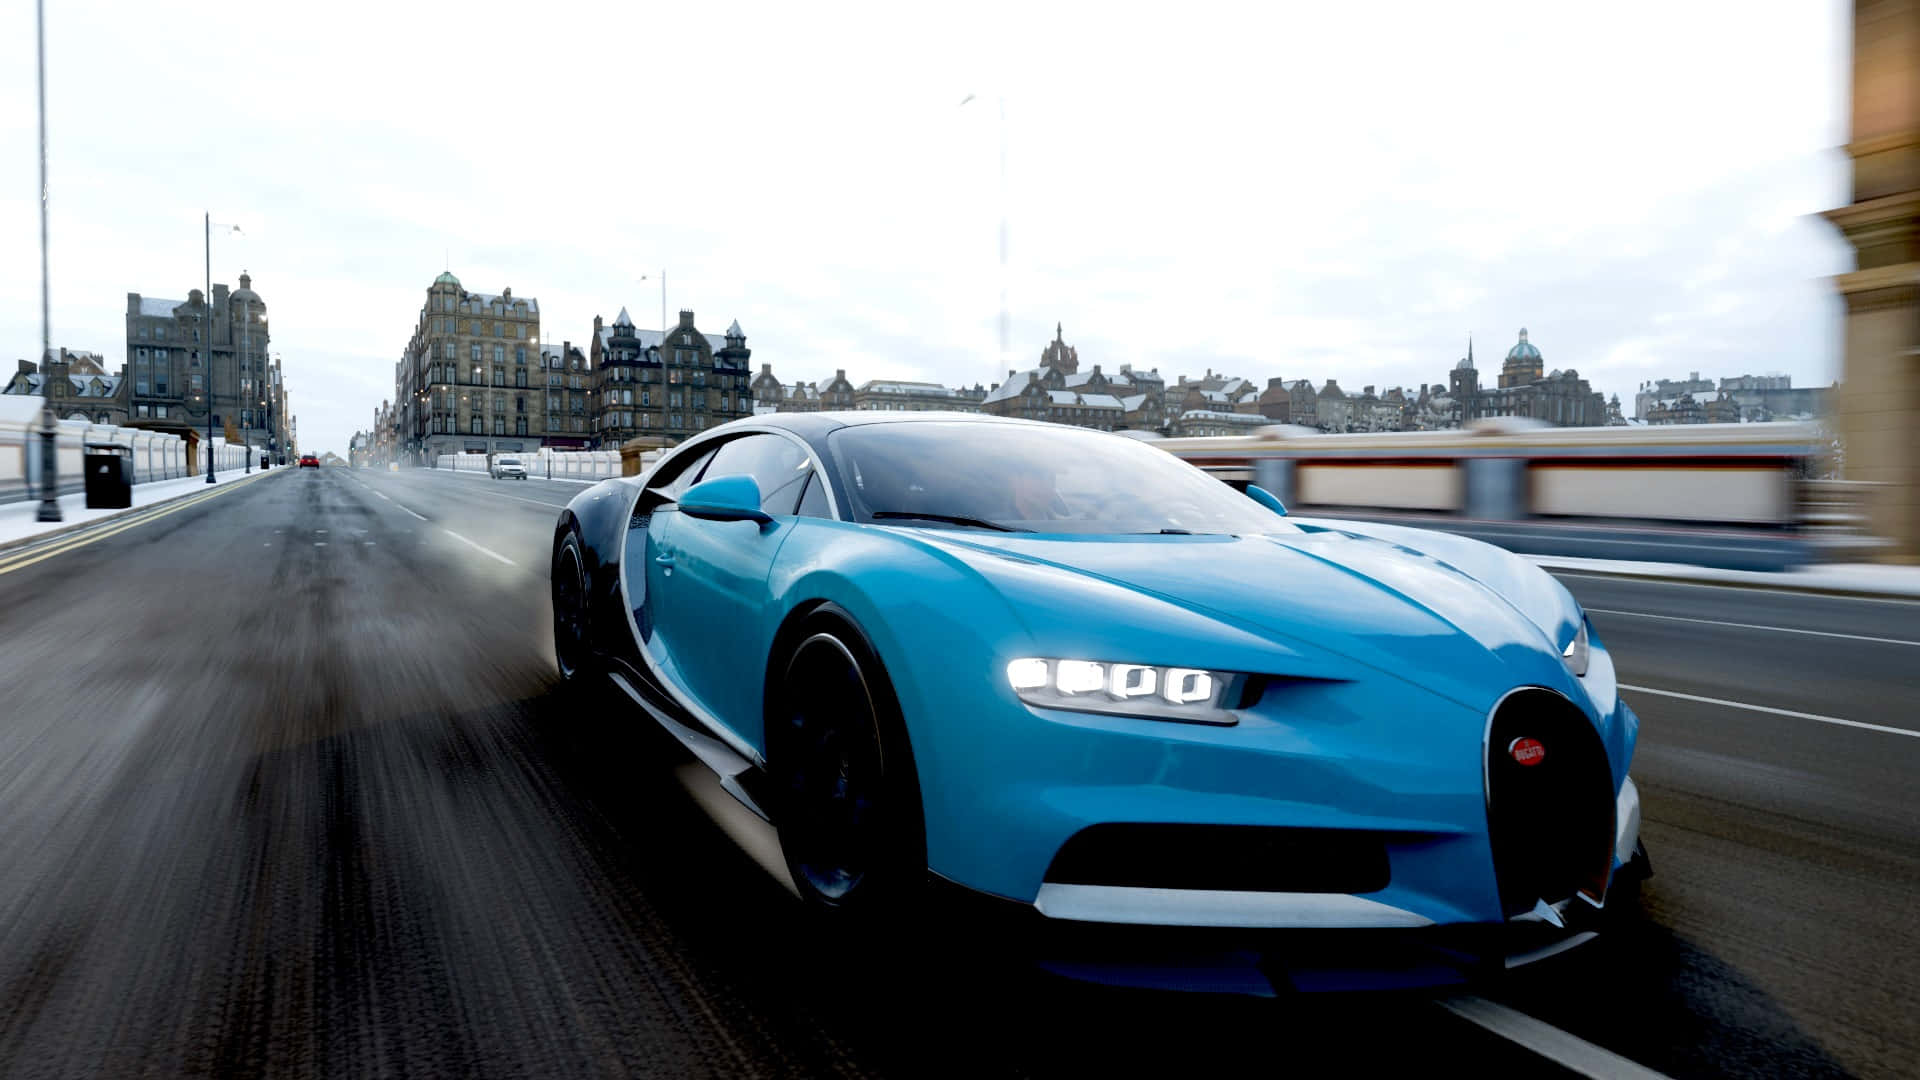 Sleek Bugatti Chiron Cruising on the Road Wallpaper